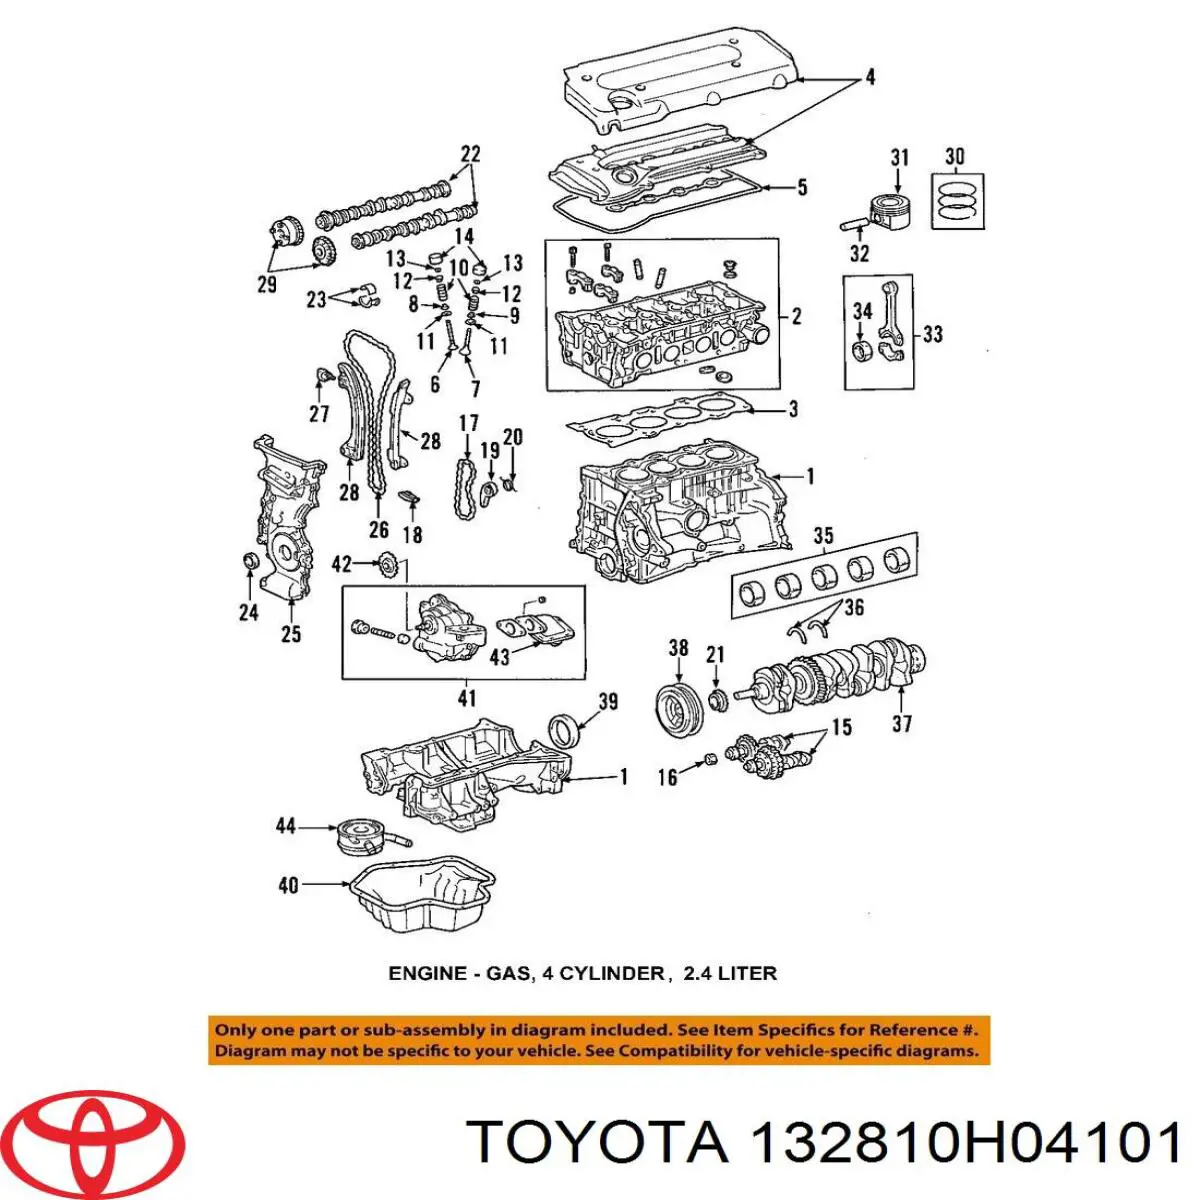 Вкладыши коленвала компрессора шатунные, комплект, стандарт (STD) на Toyota Avensis Verso 